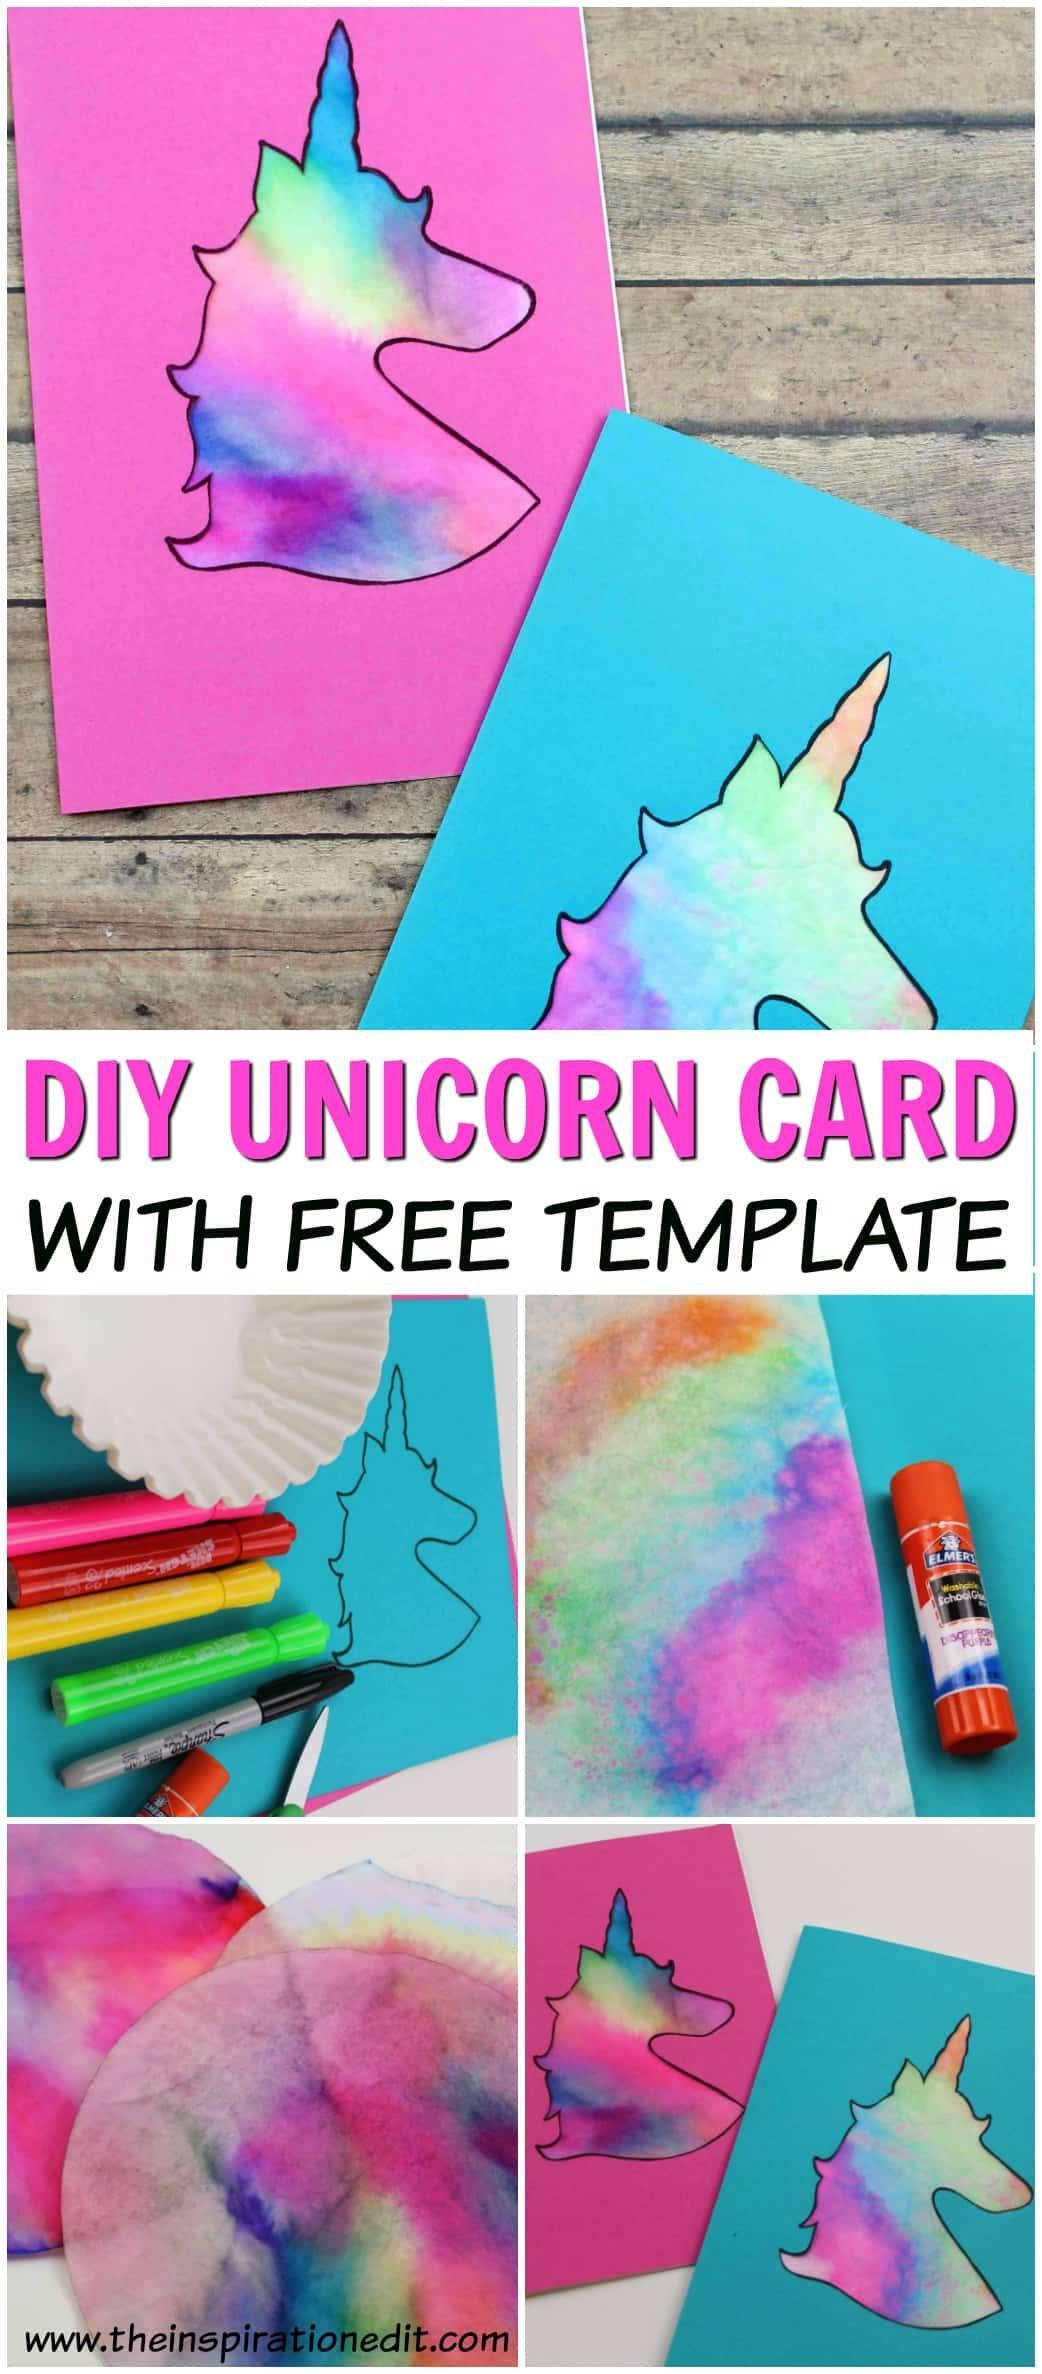 Unicorn Valentine Cards A Fun Activity! · The Inspiration Edit - Unicorn Valentine Cards A Fun Activity! · The Inspiration Edit -   17 unicorn diy Crafts ideas